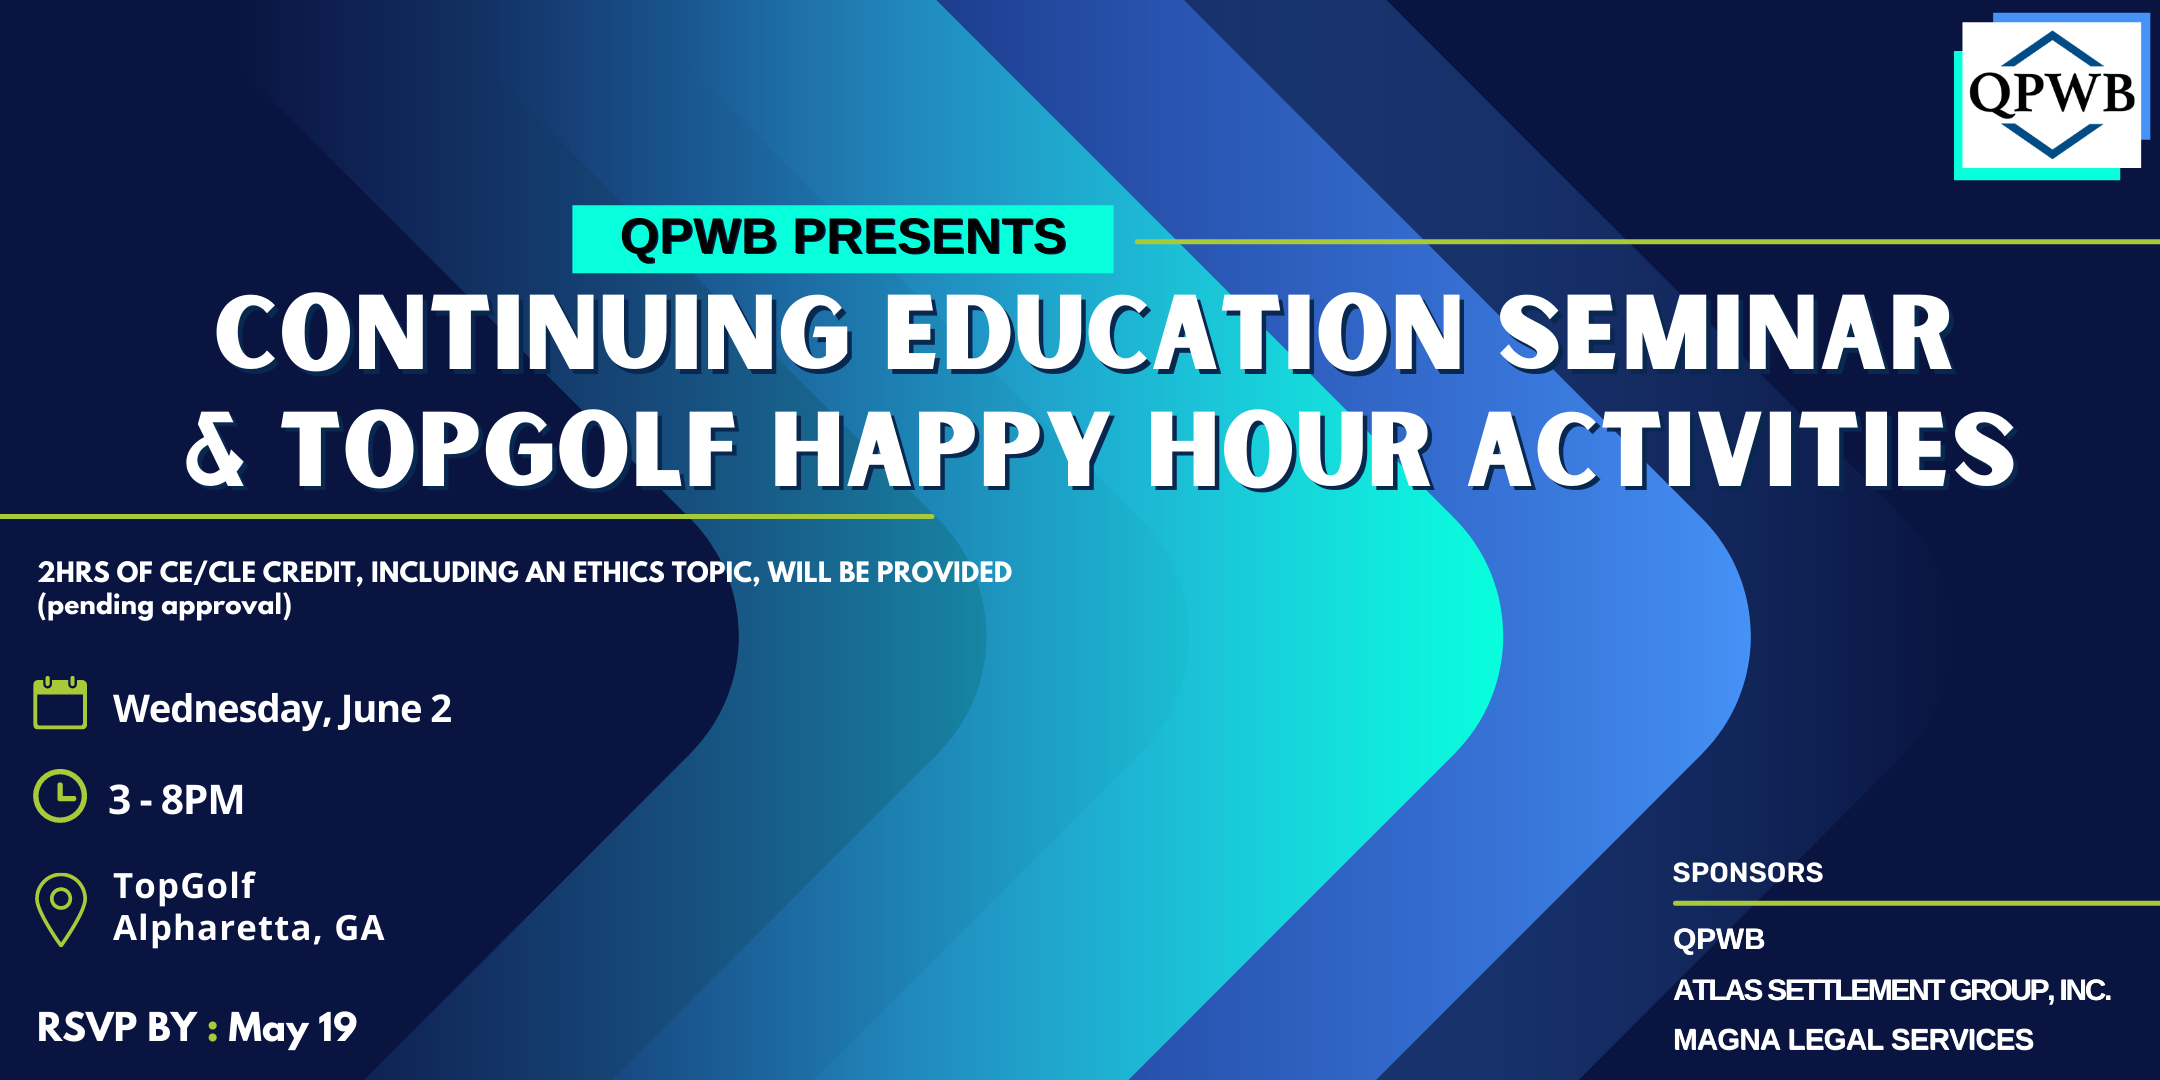 QPWB Continuing Education Seminar & Top Golf Happy Hour Activities